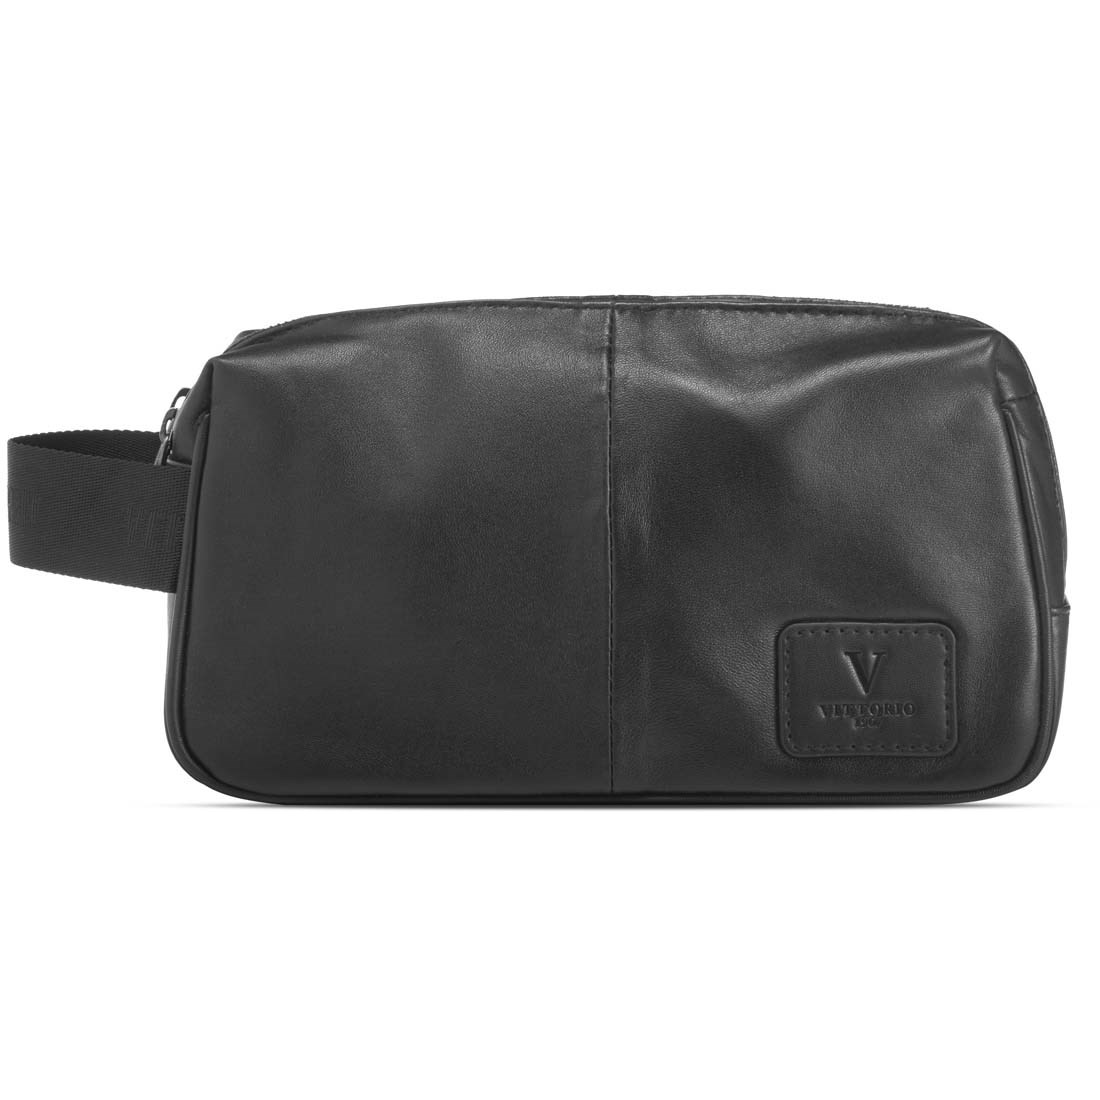 Фото - Косметичка Vittorio Vit Leather Wash Bag 2 Room - Kosmetyczka